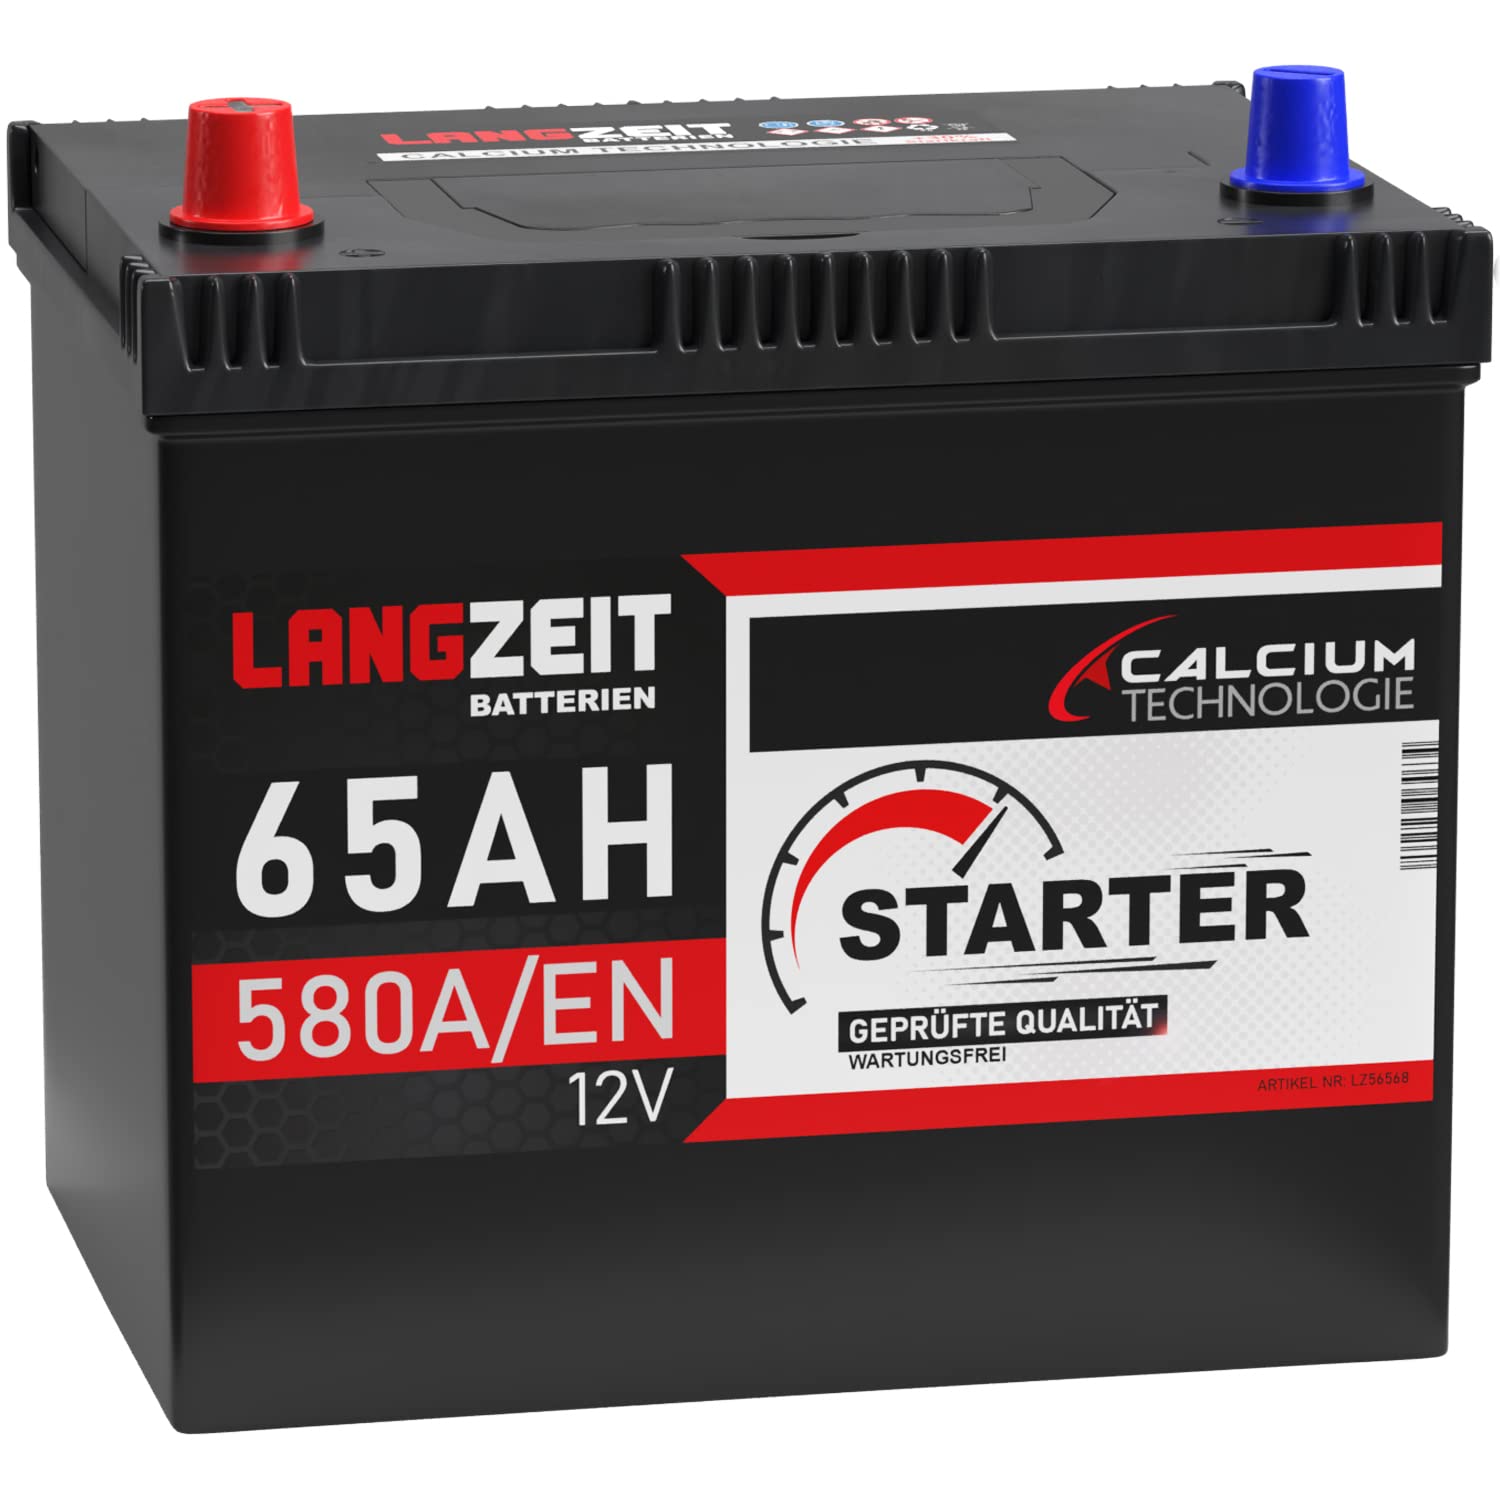 LANGZEIT ASIA Autobatterie 65Ah 12V 580A/EN ASIA Batterie Plus-Pol Links 30% mehr Startleistung ersetzt 60Ah von LANGZEIT Batterien